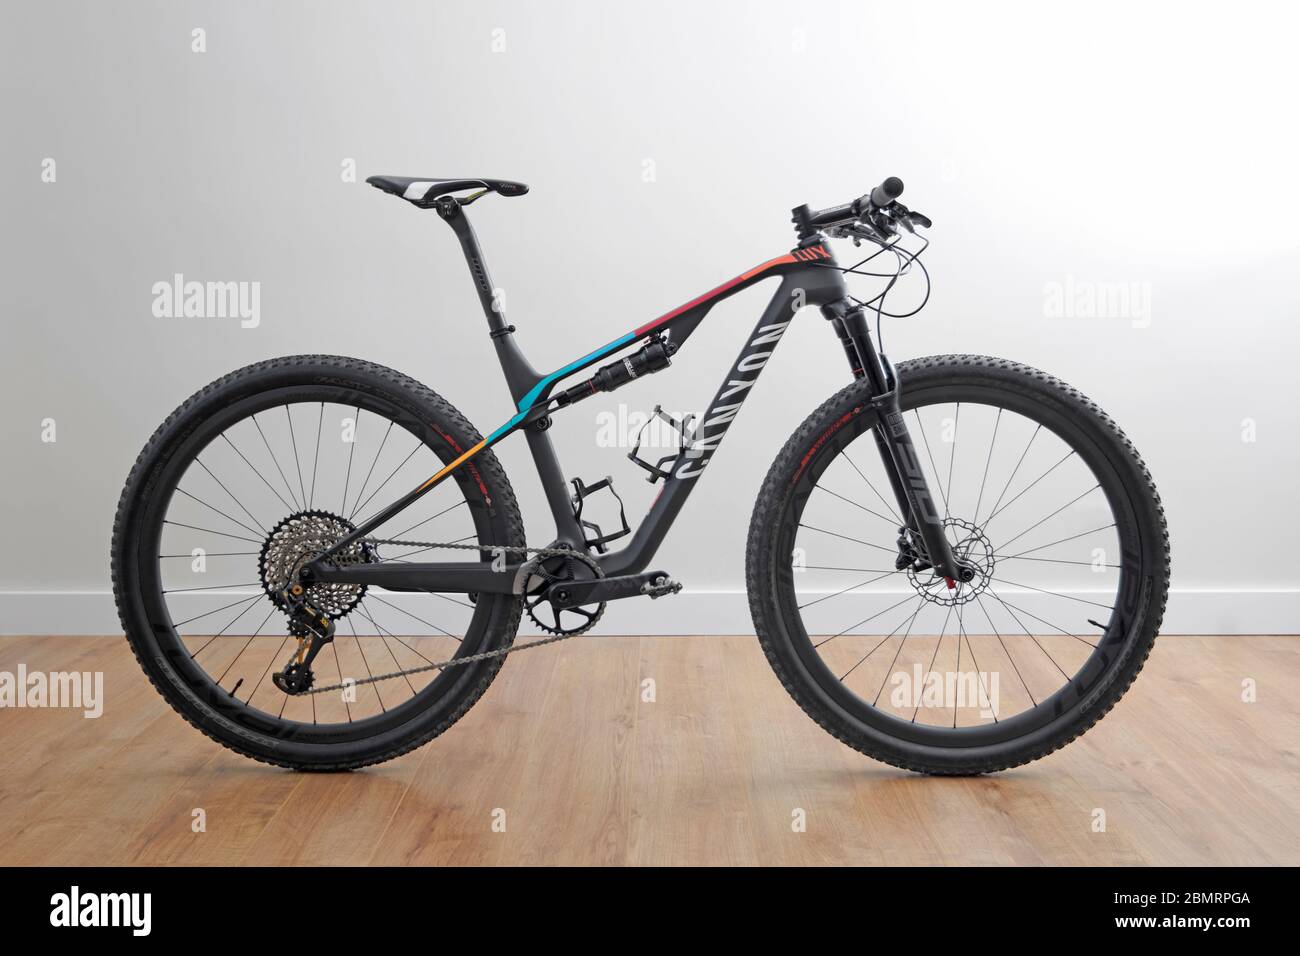 Bicicleta de doble suspensión fotografías e imágenes de alta resolución -  Alamy